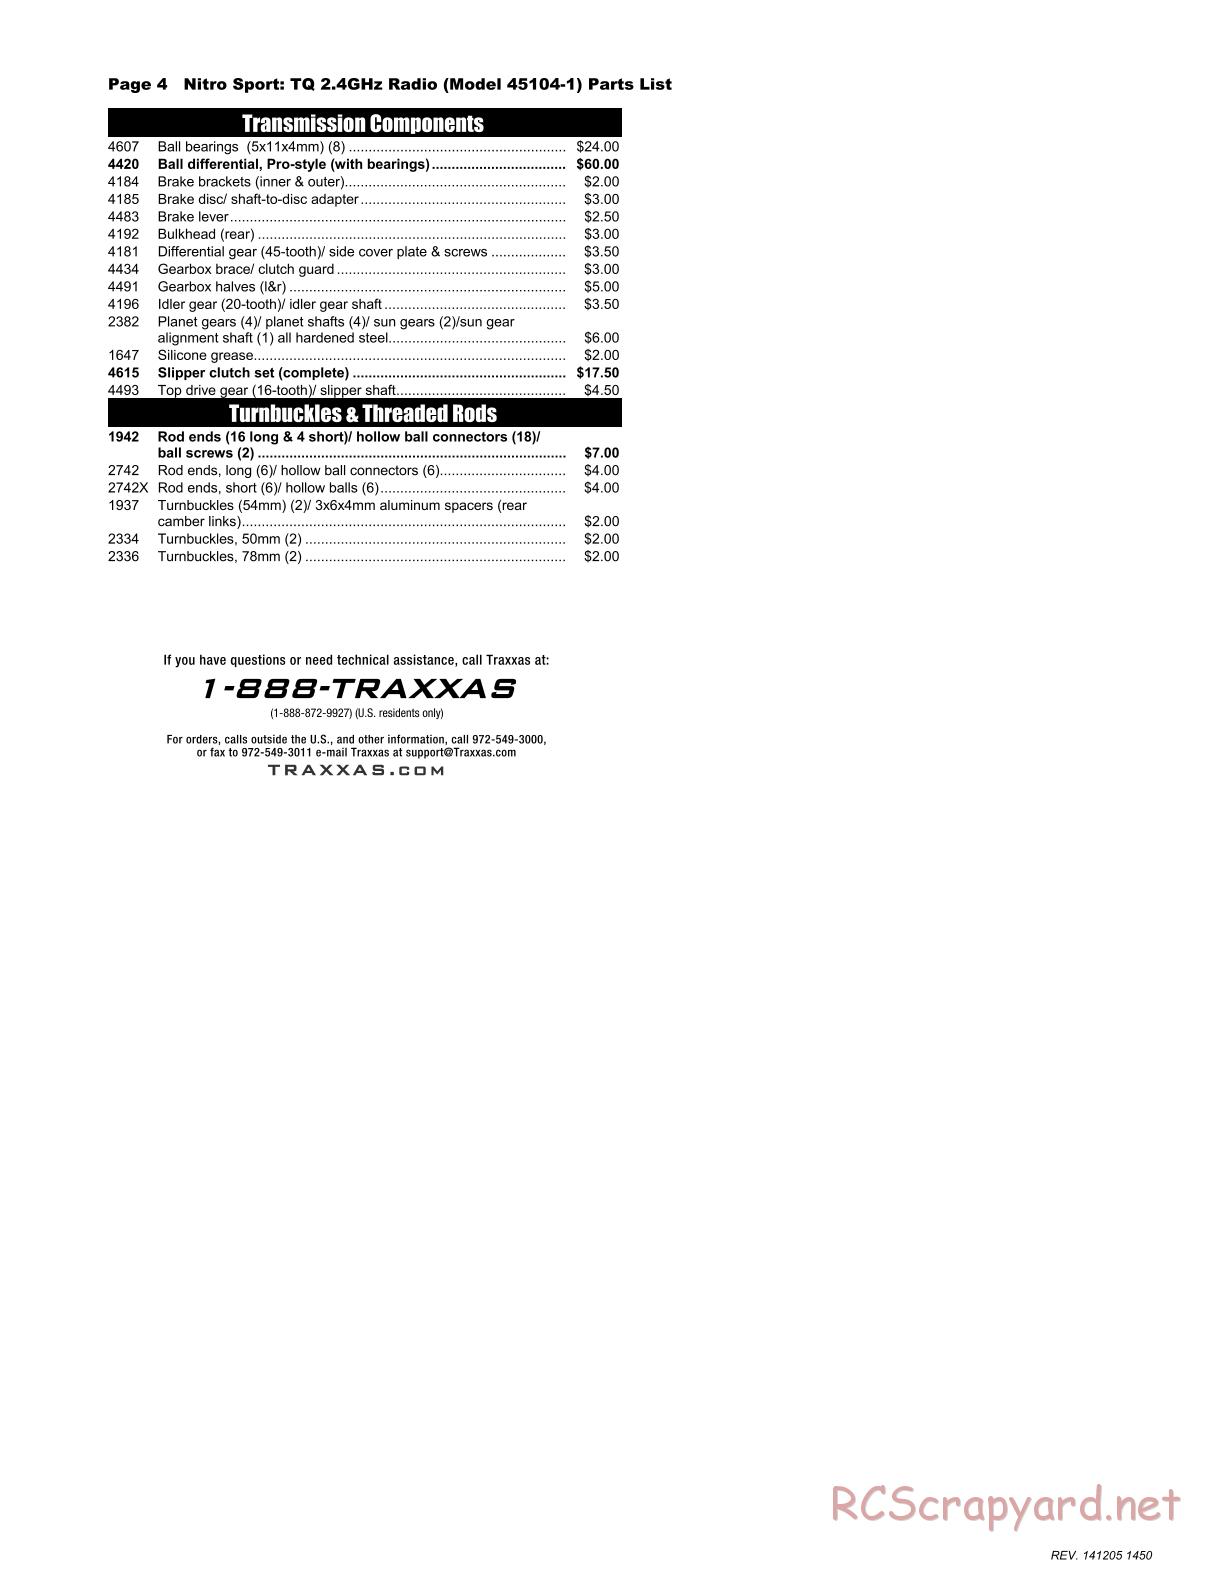 Traxxas - Nitro Sport (2015) - Parts List - Page 4